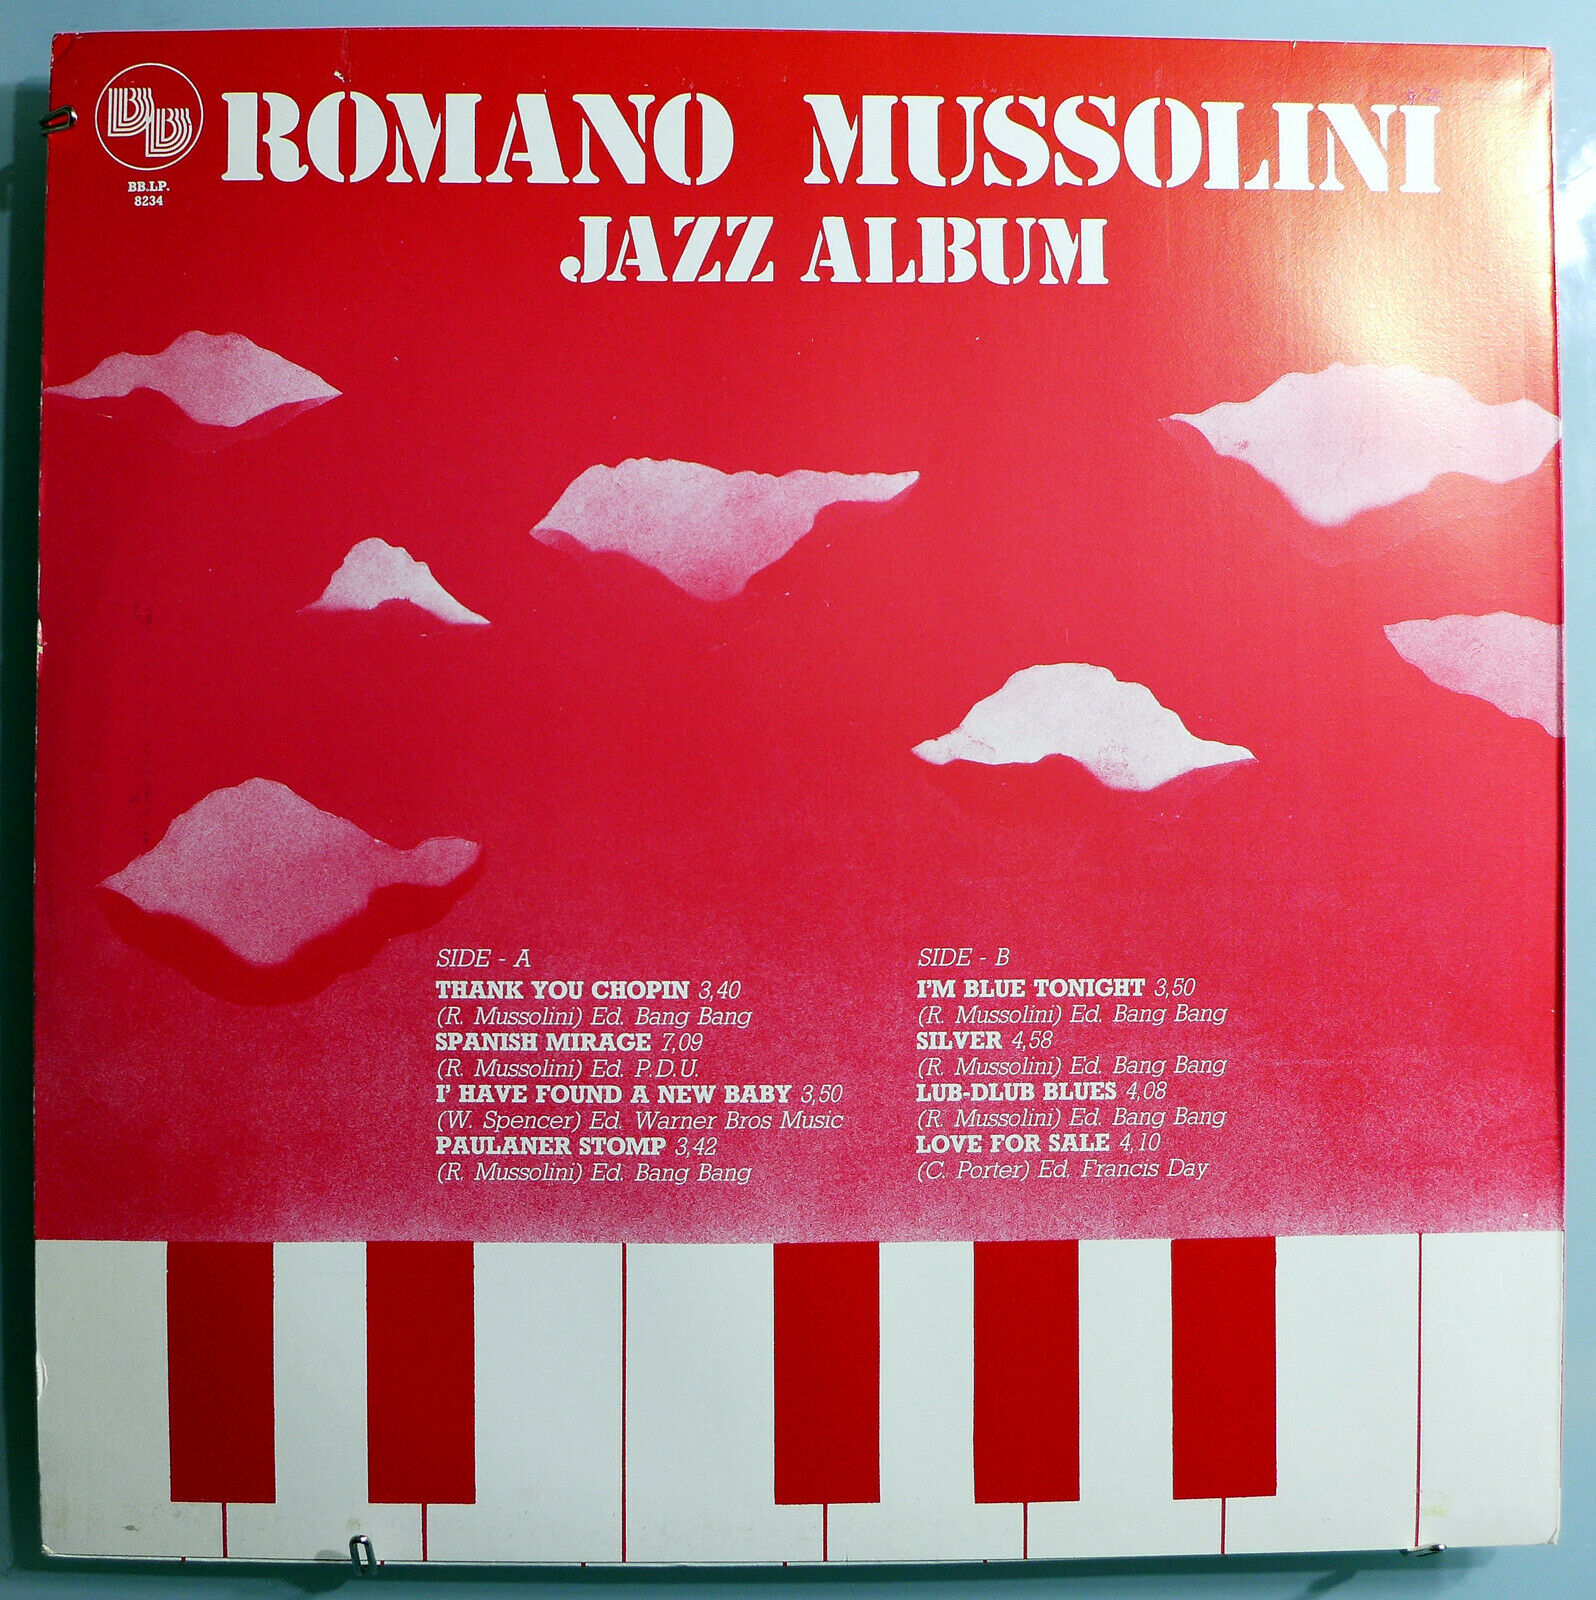 Pic 1 ROMANO MUSSOLINI JAZZ ALBUM RARE ORIG '82 ITALIAN-ONLY BB RECORDS PROMO LP MINT